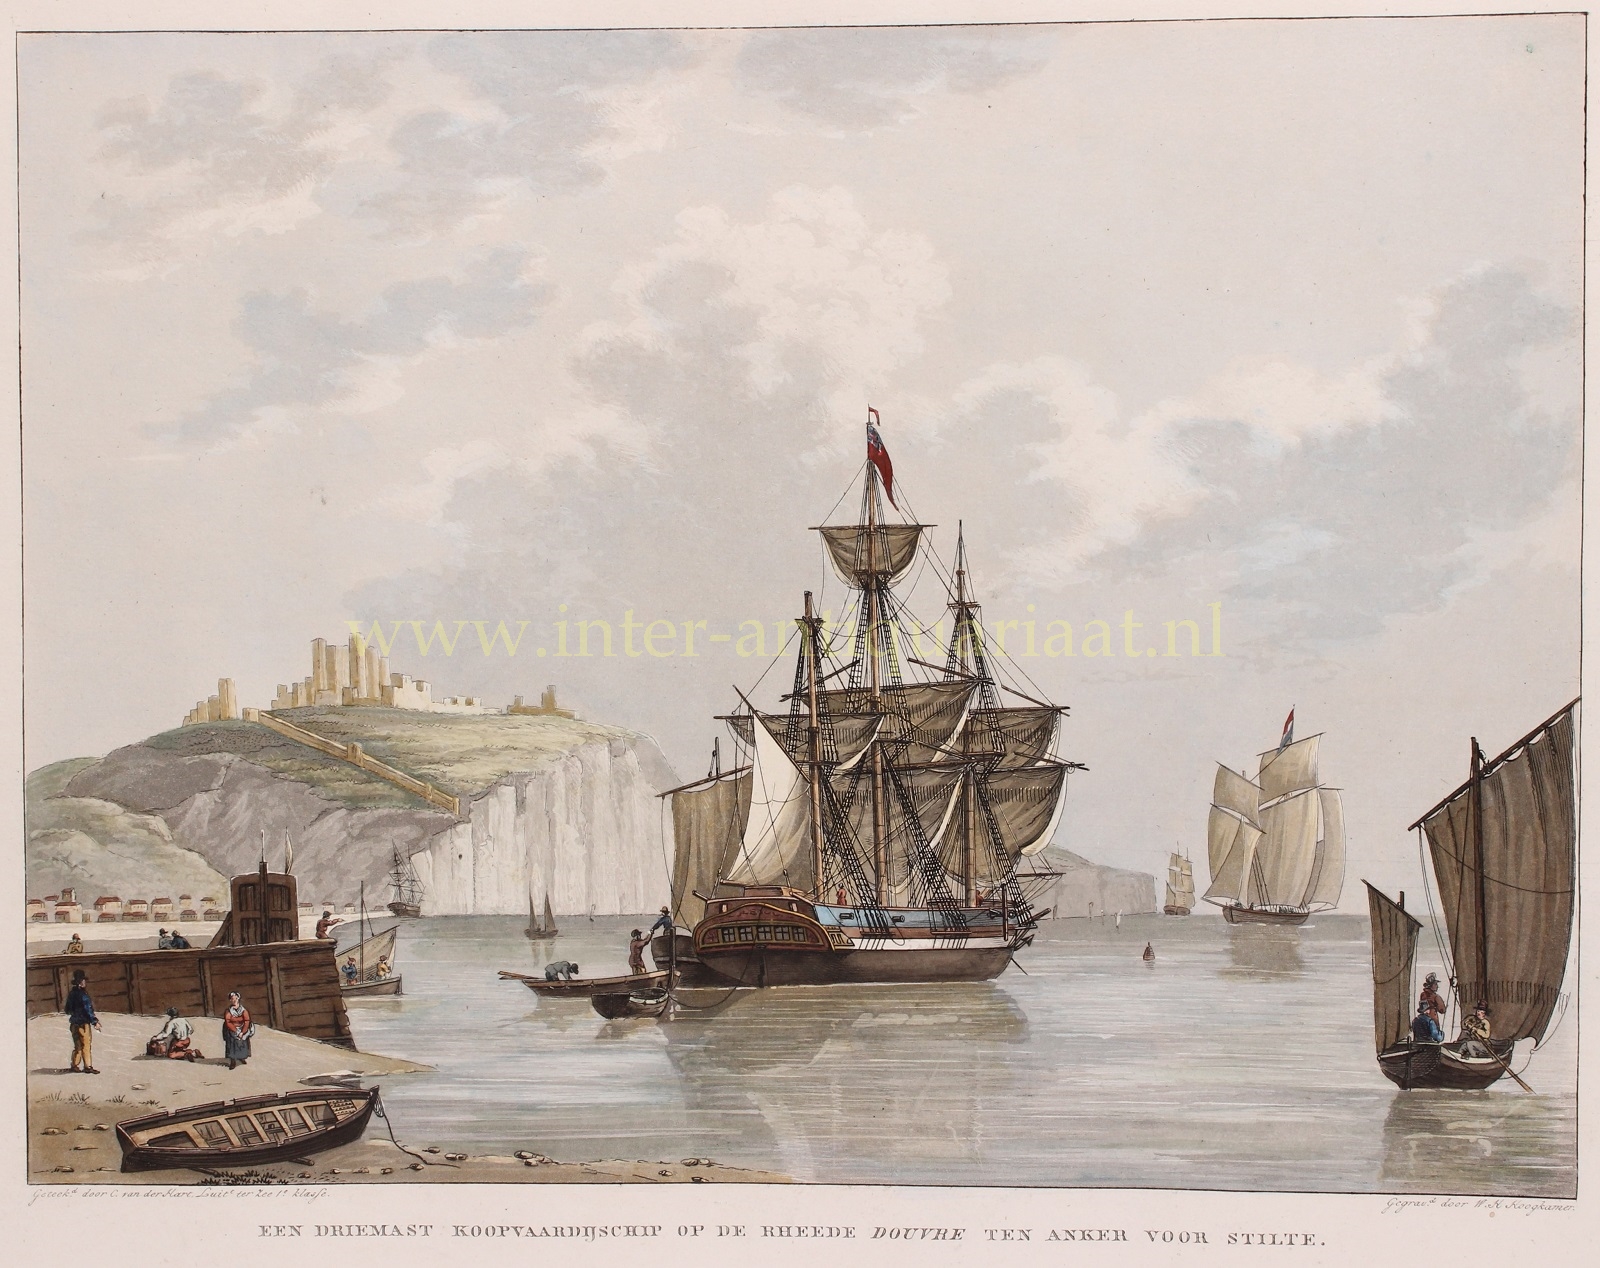 Hoogkamer-- W.H. - Merchant ships off Dover - Willem Hendrik Hoogkamer after Christoffel van der Hart, c. 1830